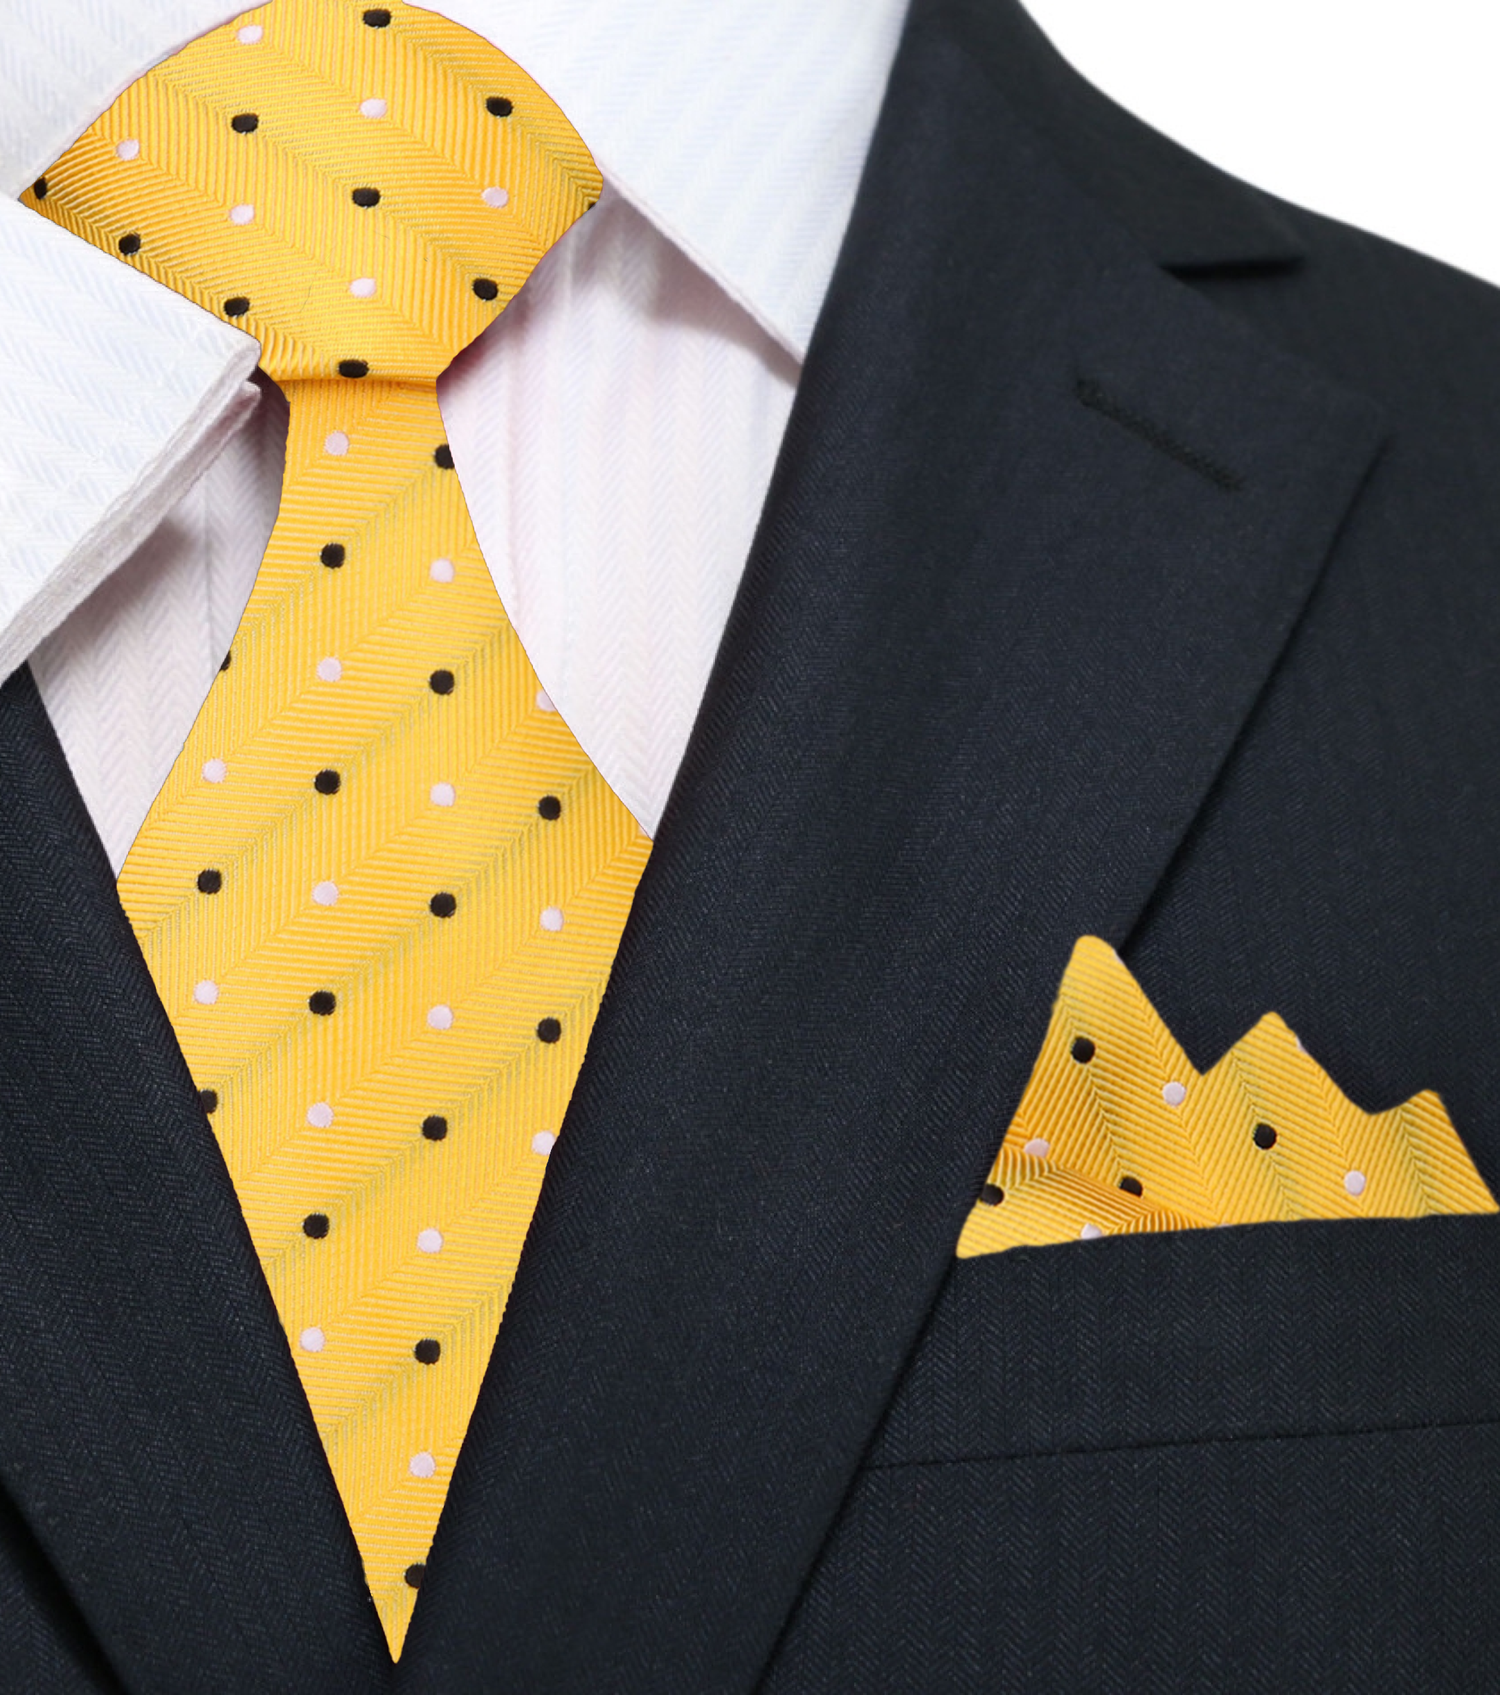 A Yellow, White, Black Polka Dot Pattern Silk Necktie, Matching Pocket Square||Yellow with Black, White Dots